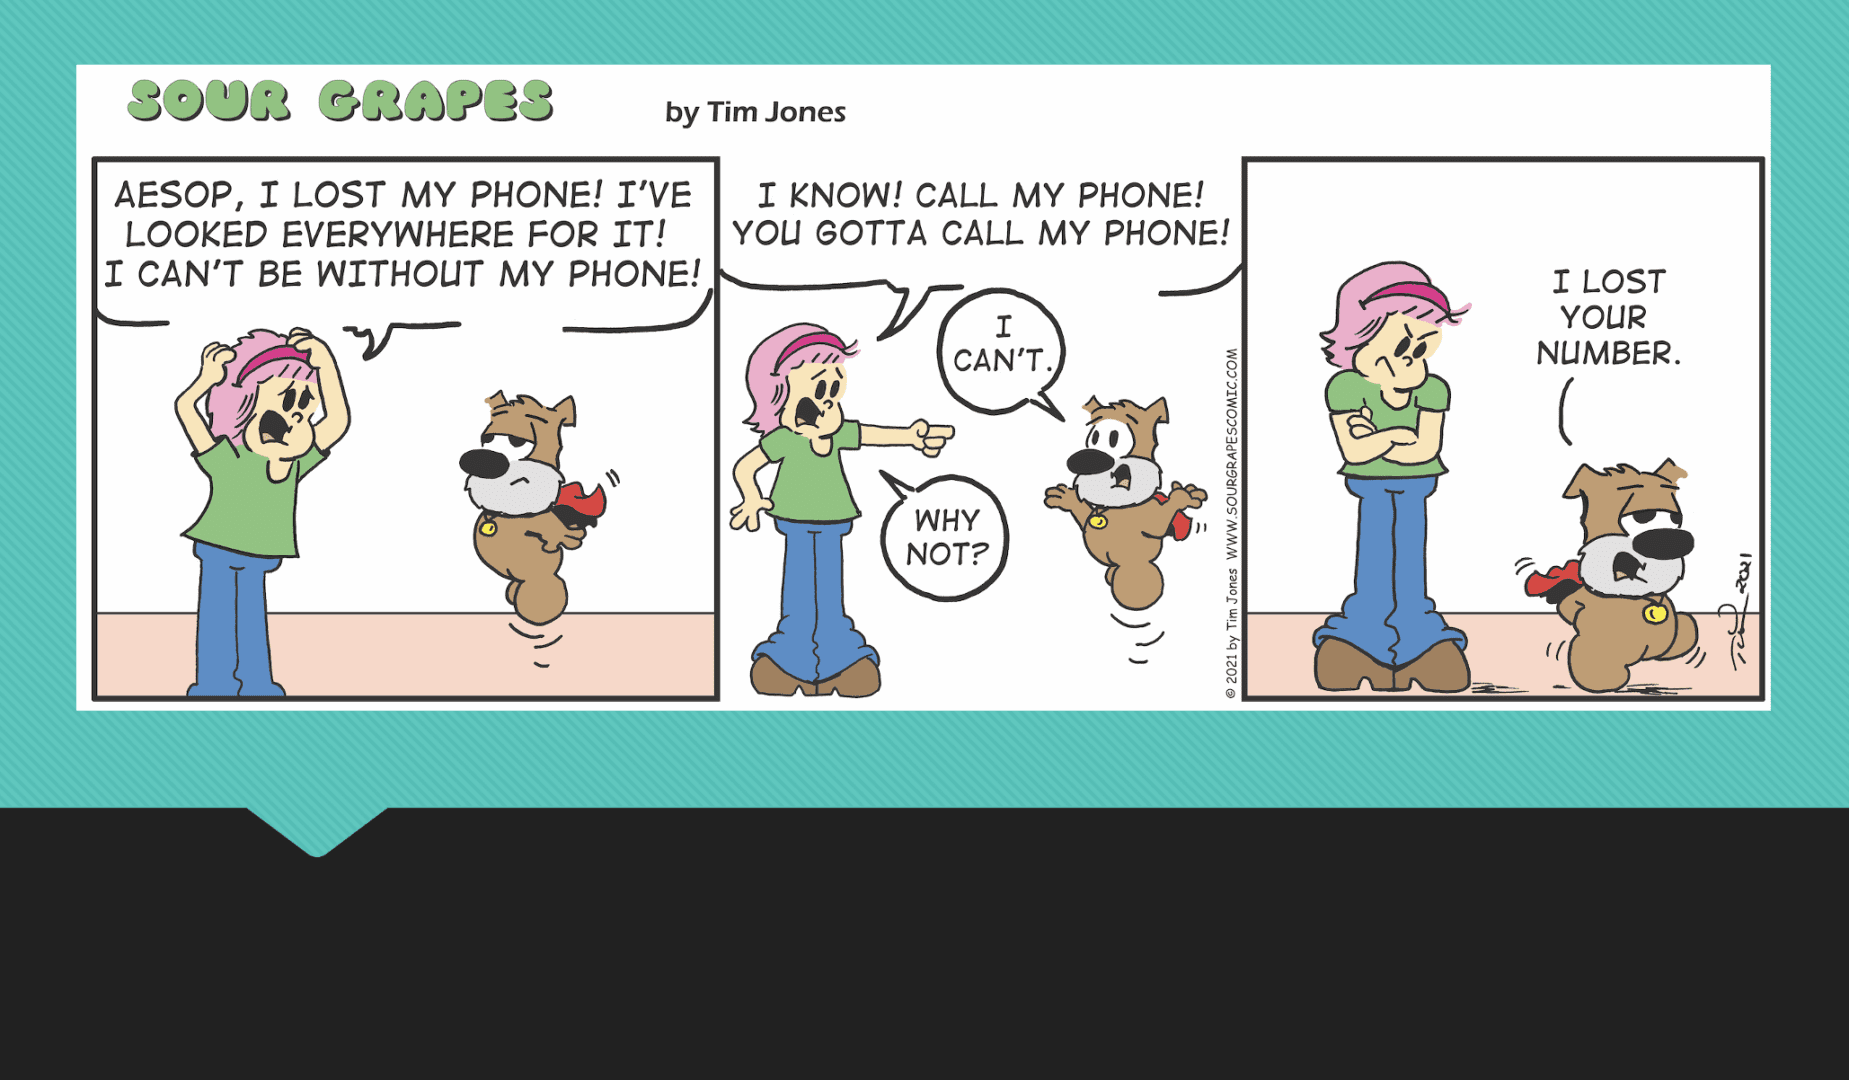 A comic strip showing a woman talking to a dog.